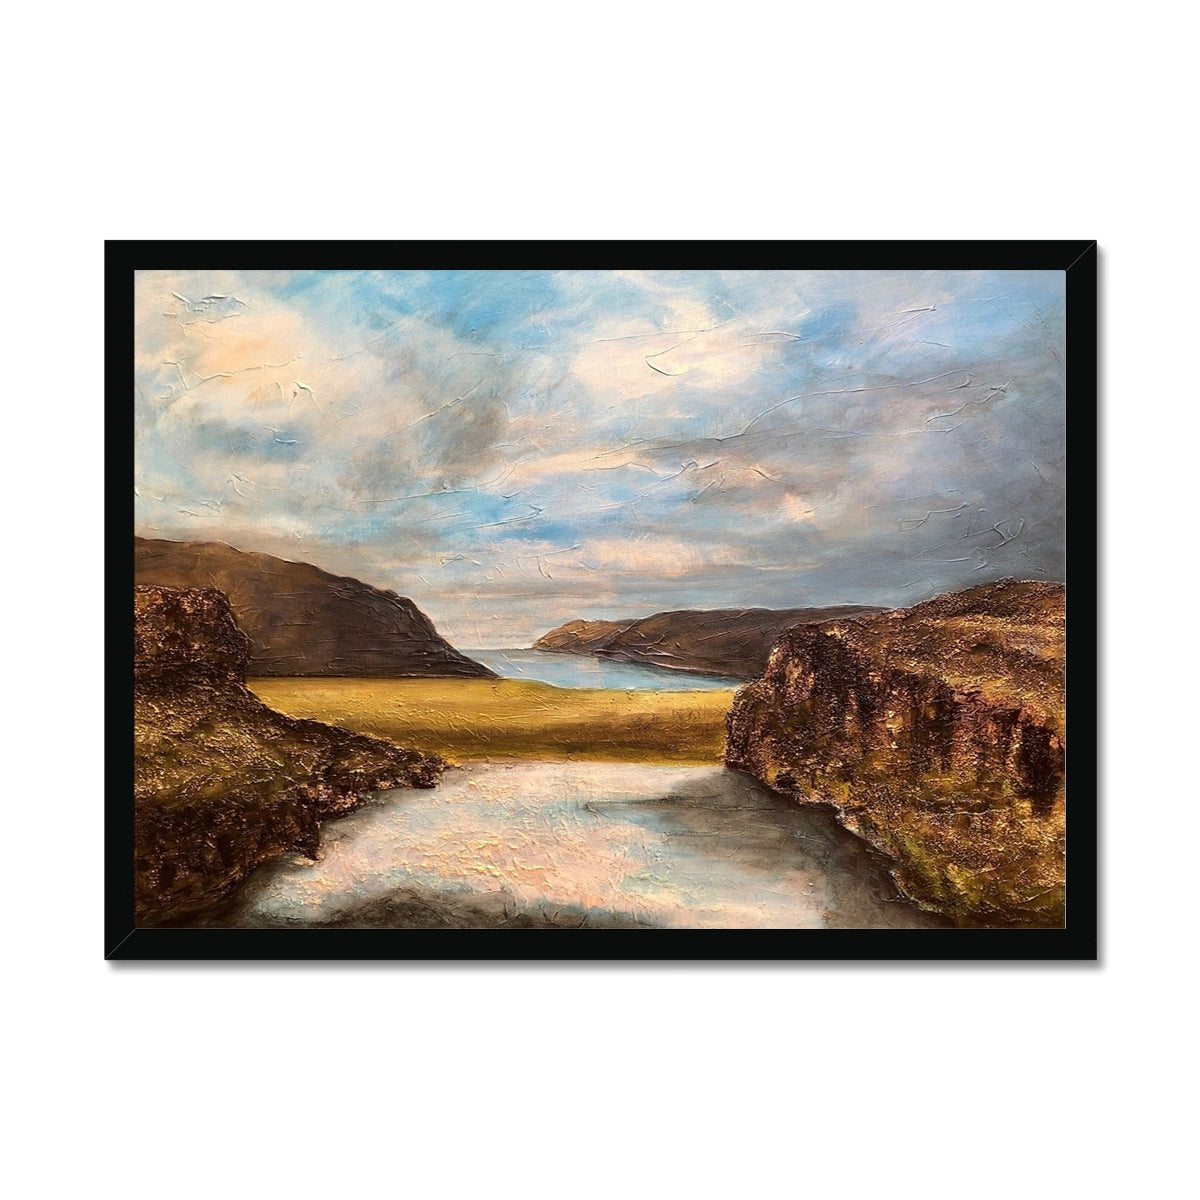 Westfjords Iceland Painting | Framed Prints From Scotland-Framed Prints-World Art Gallery-A2 Landscape-Black Frame-Paintings, Prints, Homeware, Art Gifts From Scotland By Scottish Artist Kevin Hunter